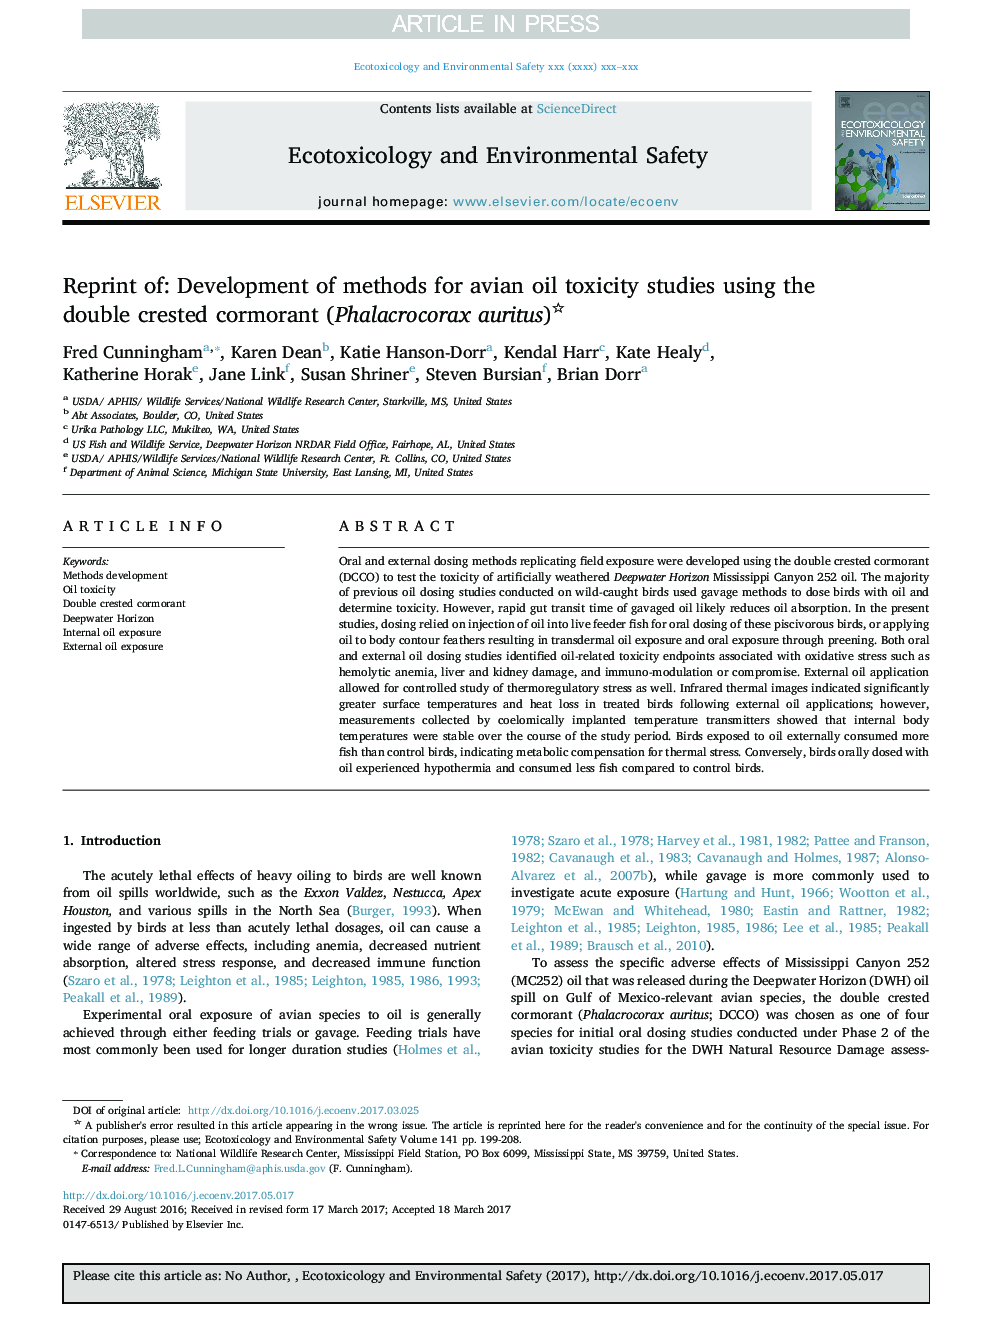 Reprint of: Development of methods for avian oil toxicity studies using the double crested cormorant (Phalacrocorax auritus)